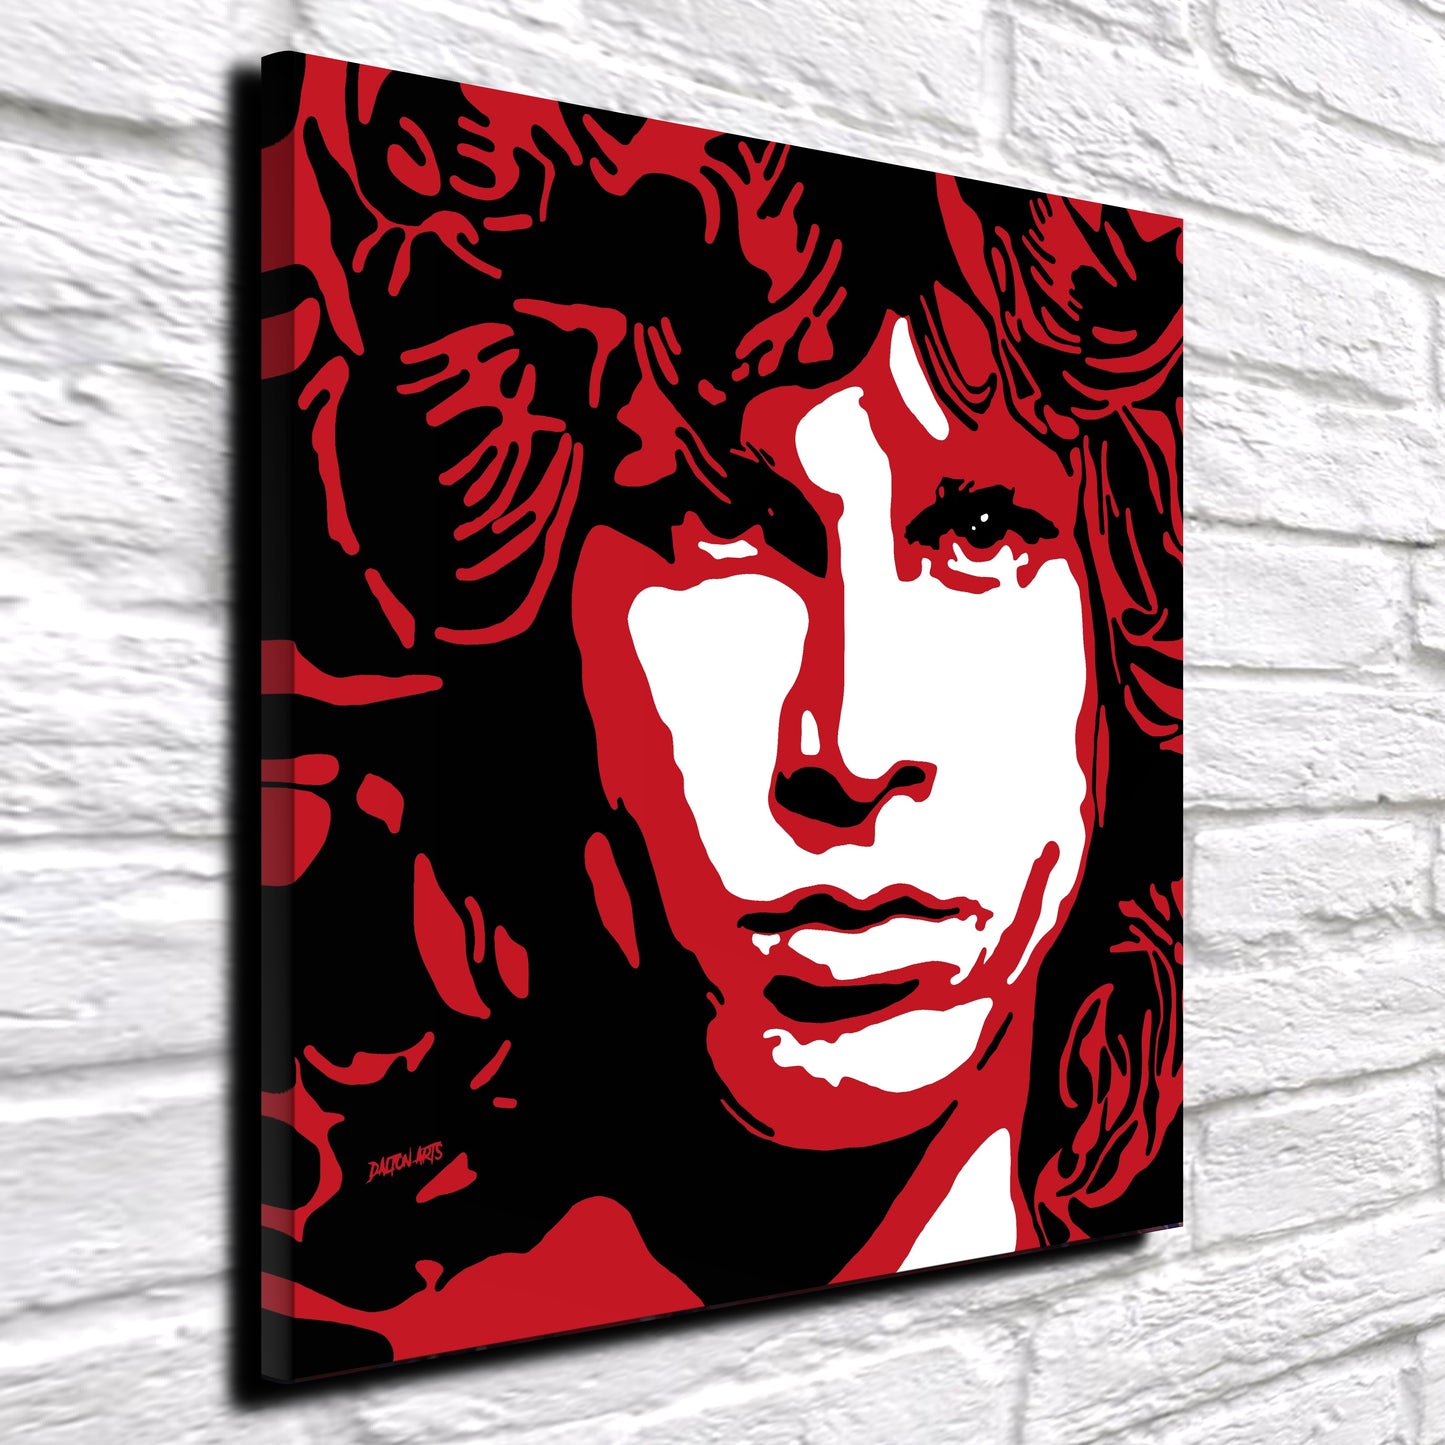 Jim Morrison Pop Art